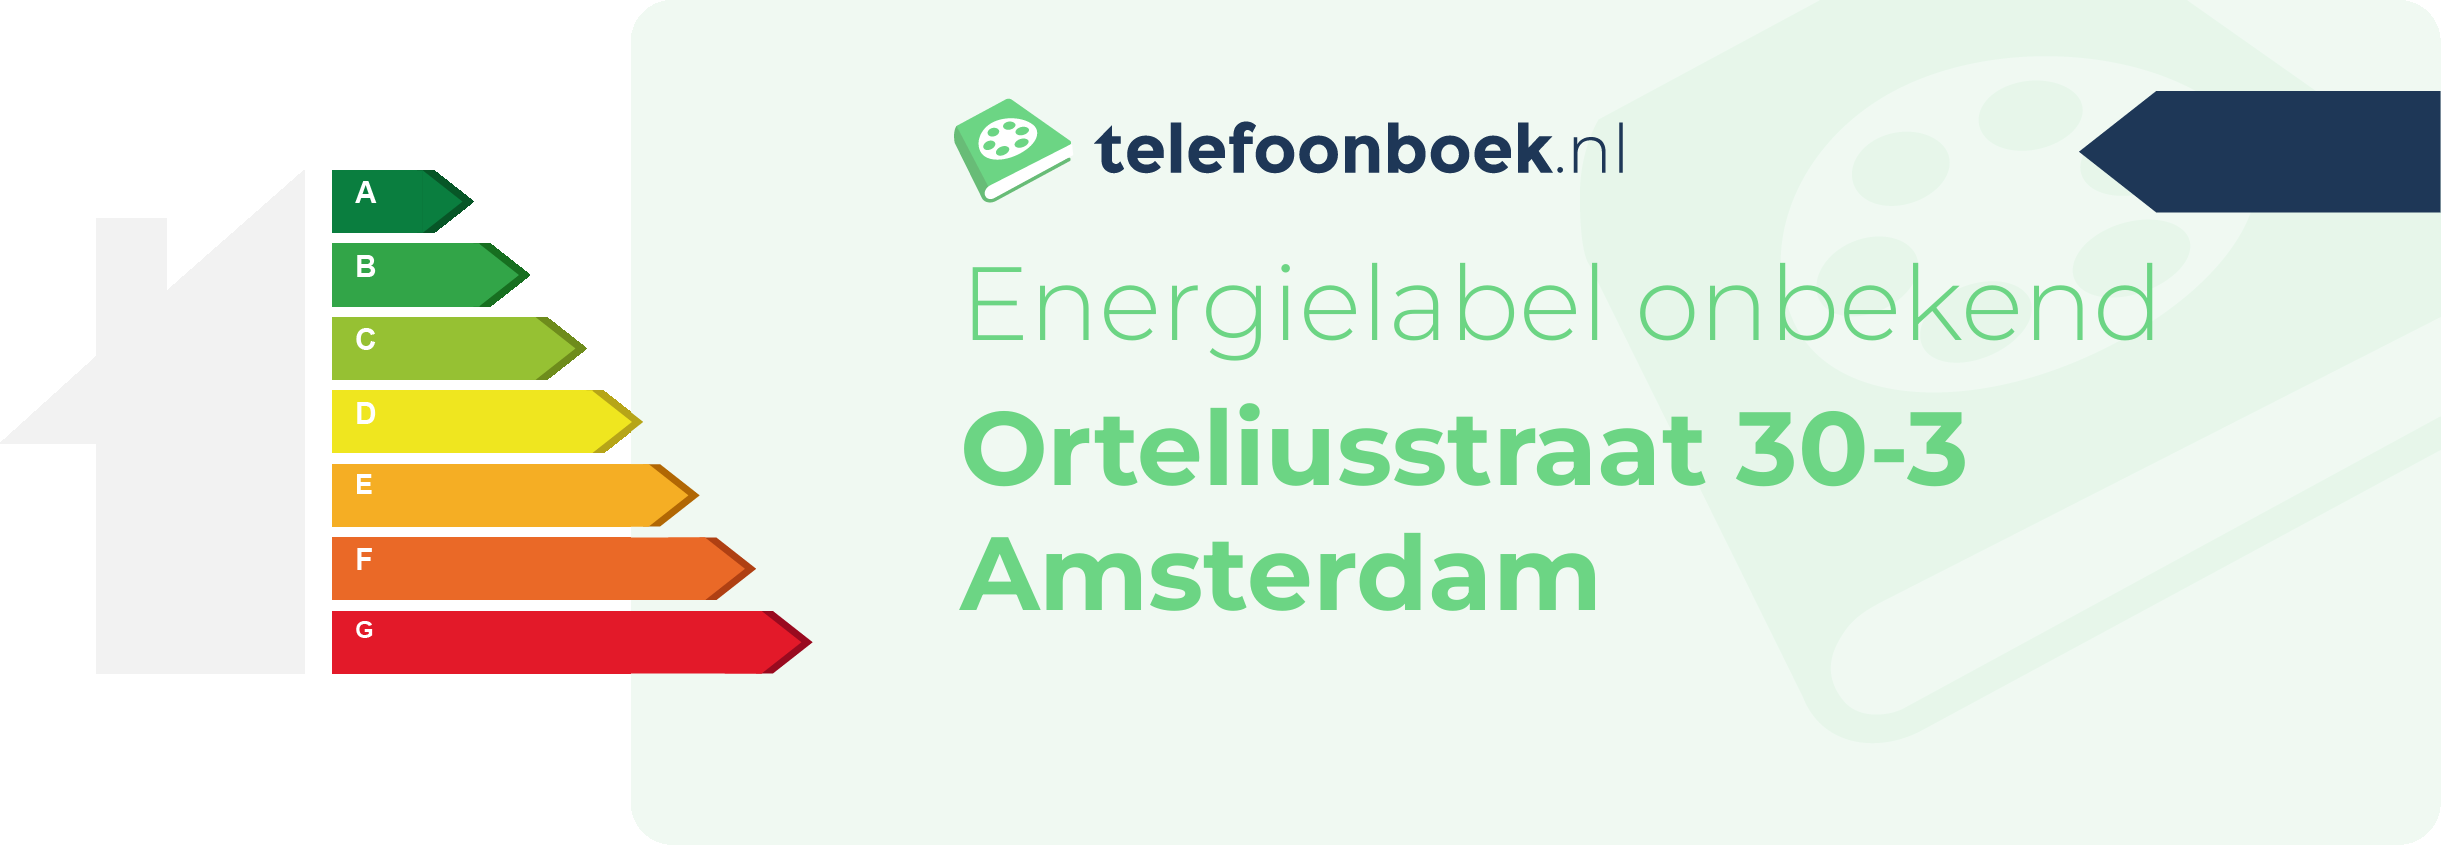 Energielabel Orteliusstraat 30-3 Amsterdam